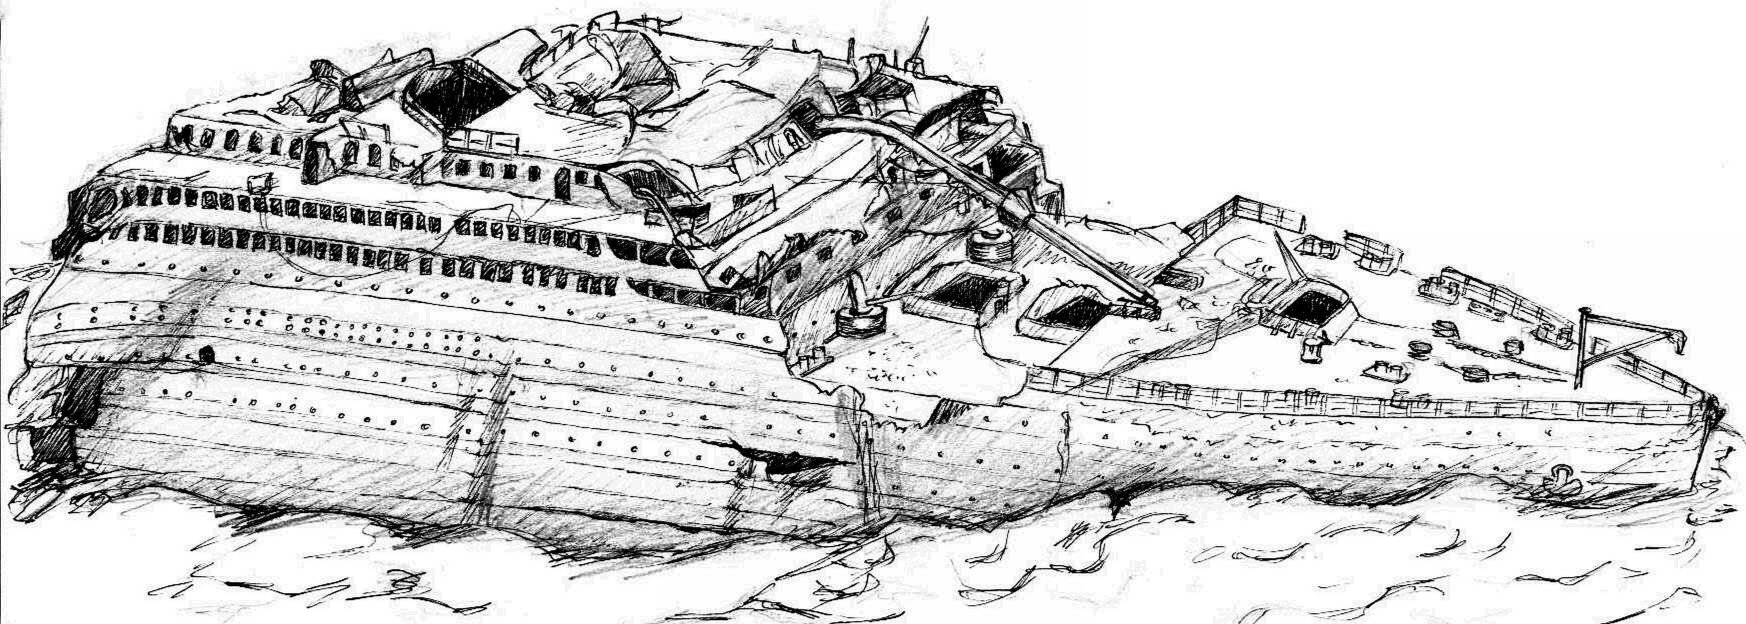 Раскраски Титаник и Британик